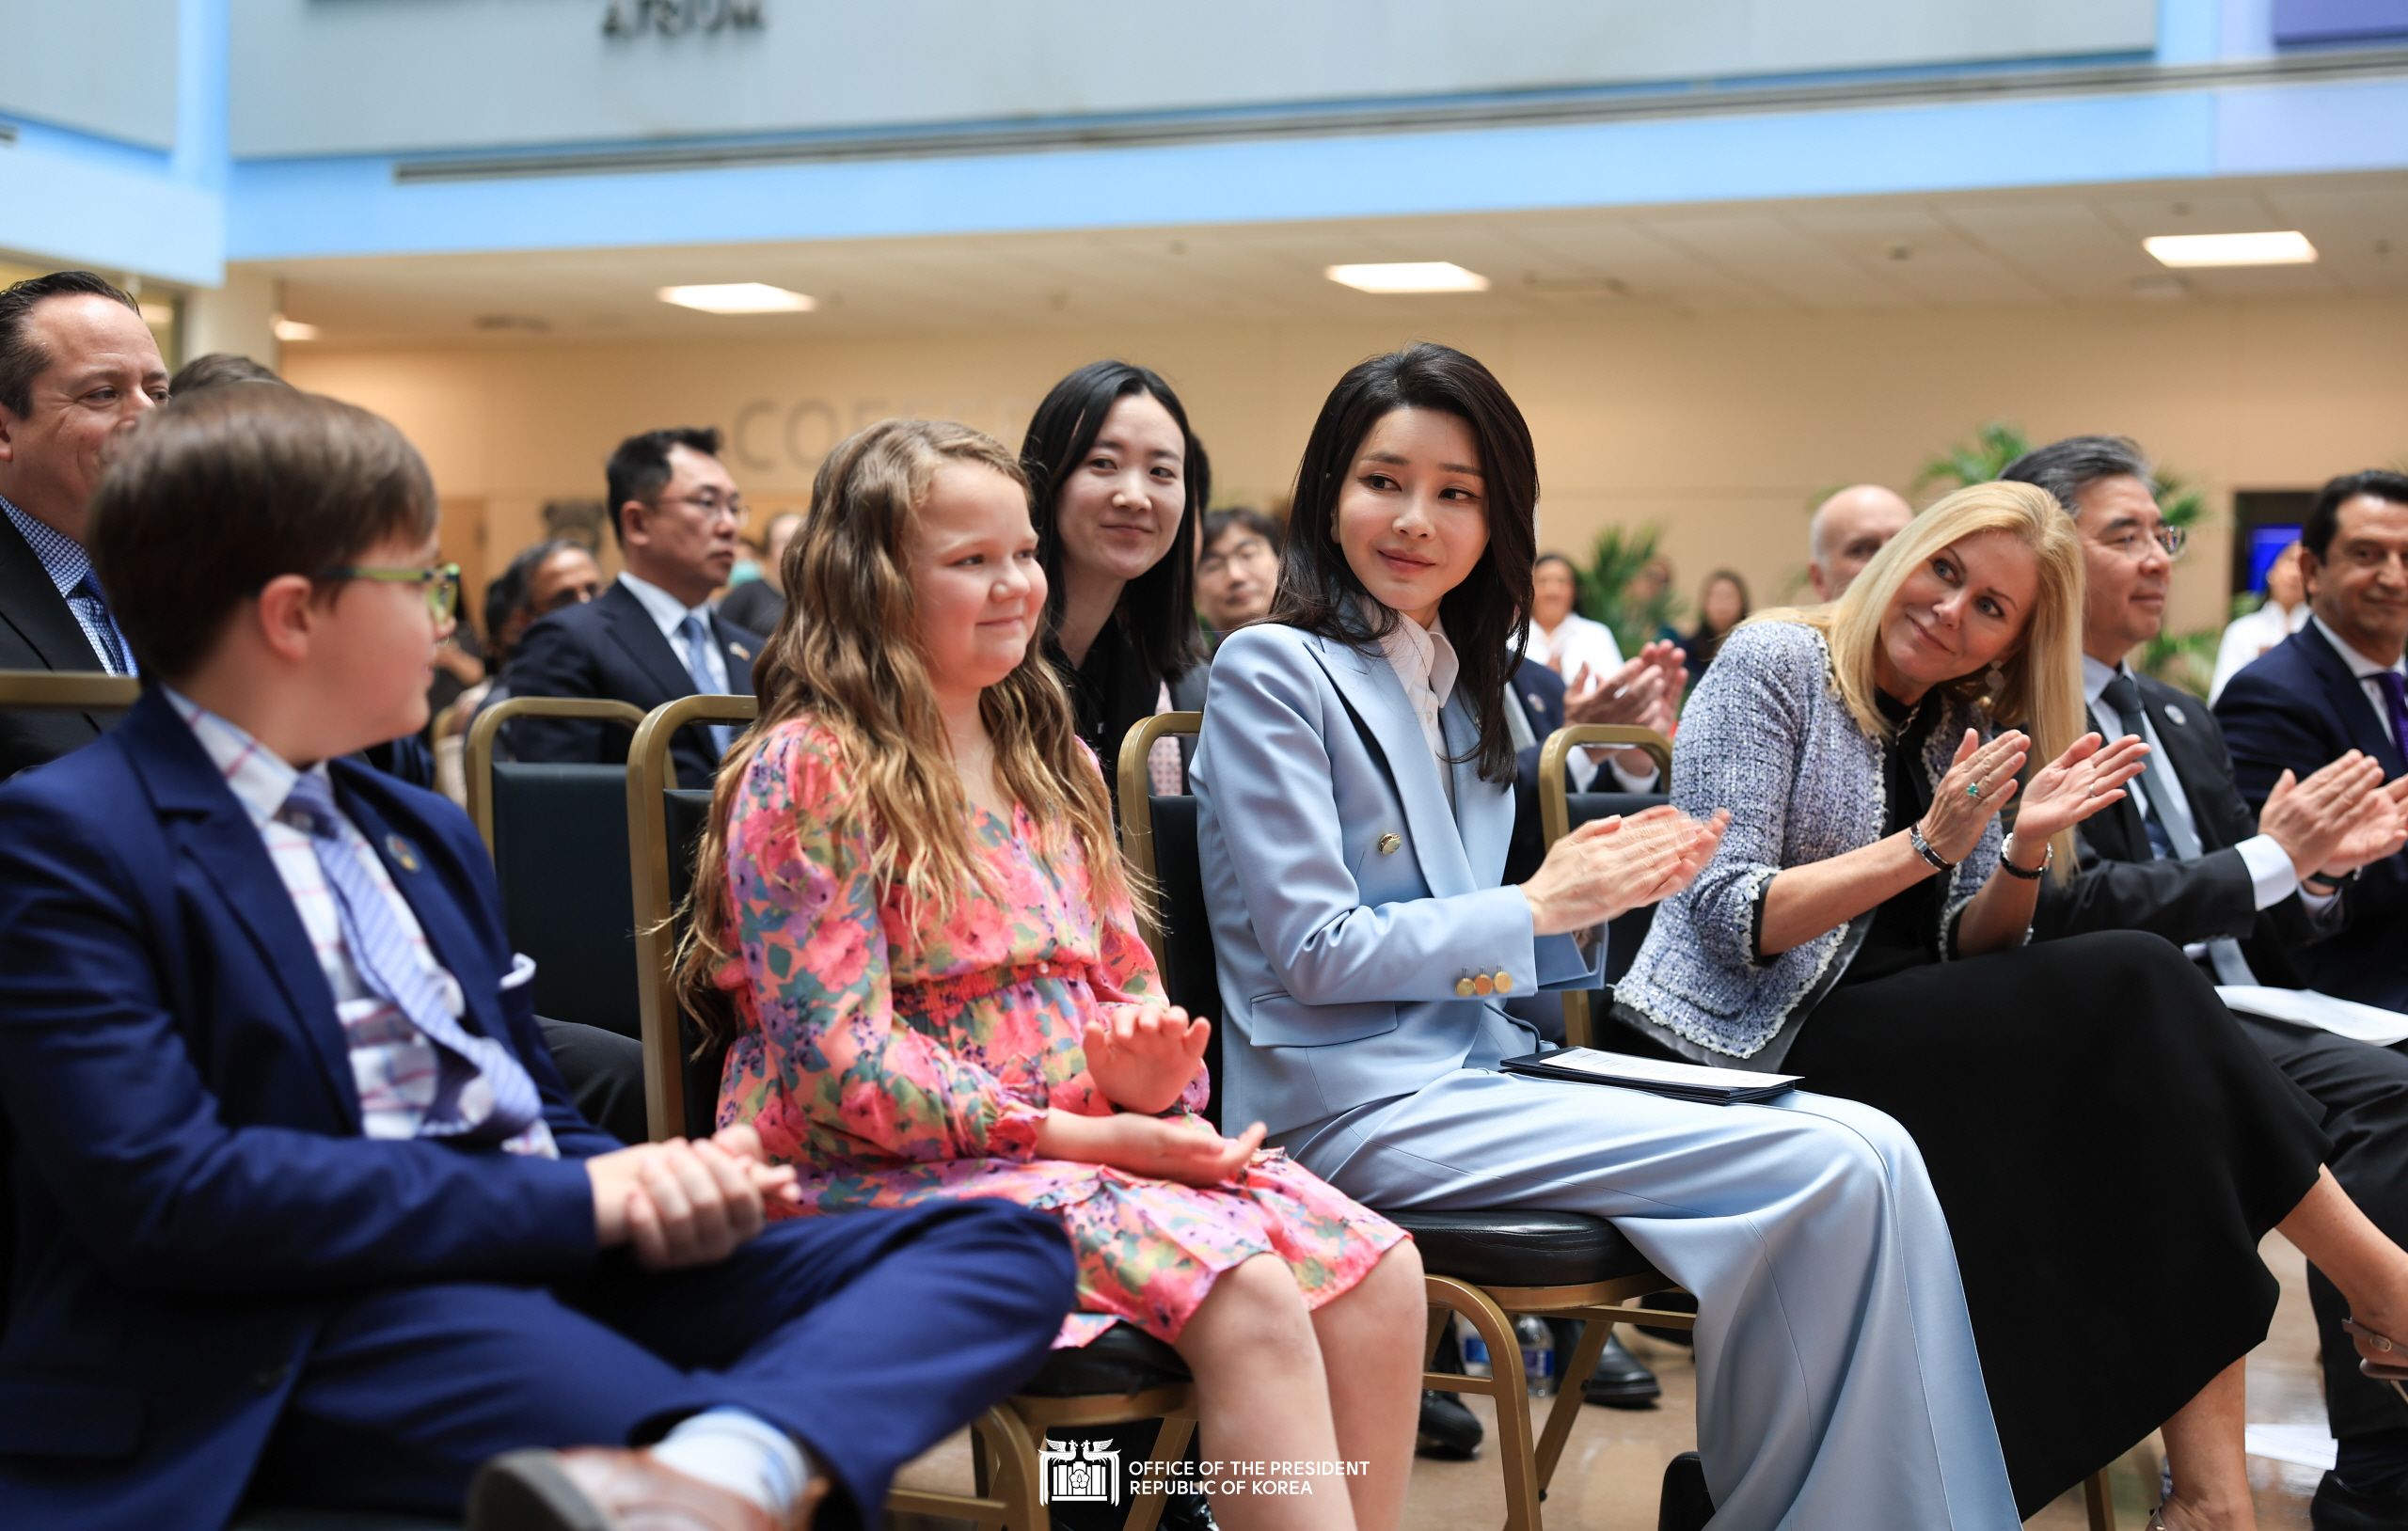 First Lady Kim Keon Hee visiting Children’s National Hospital in Washington, D.C slide 1